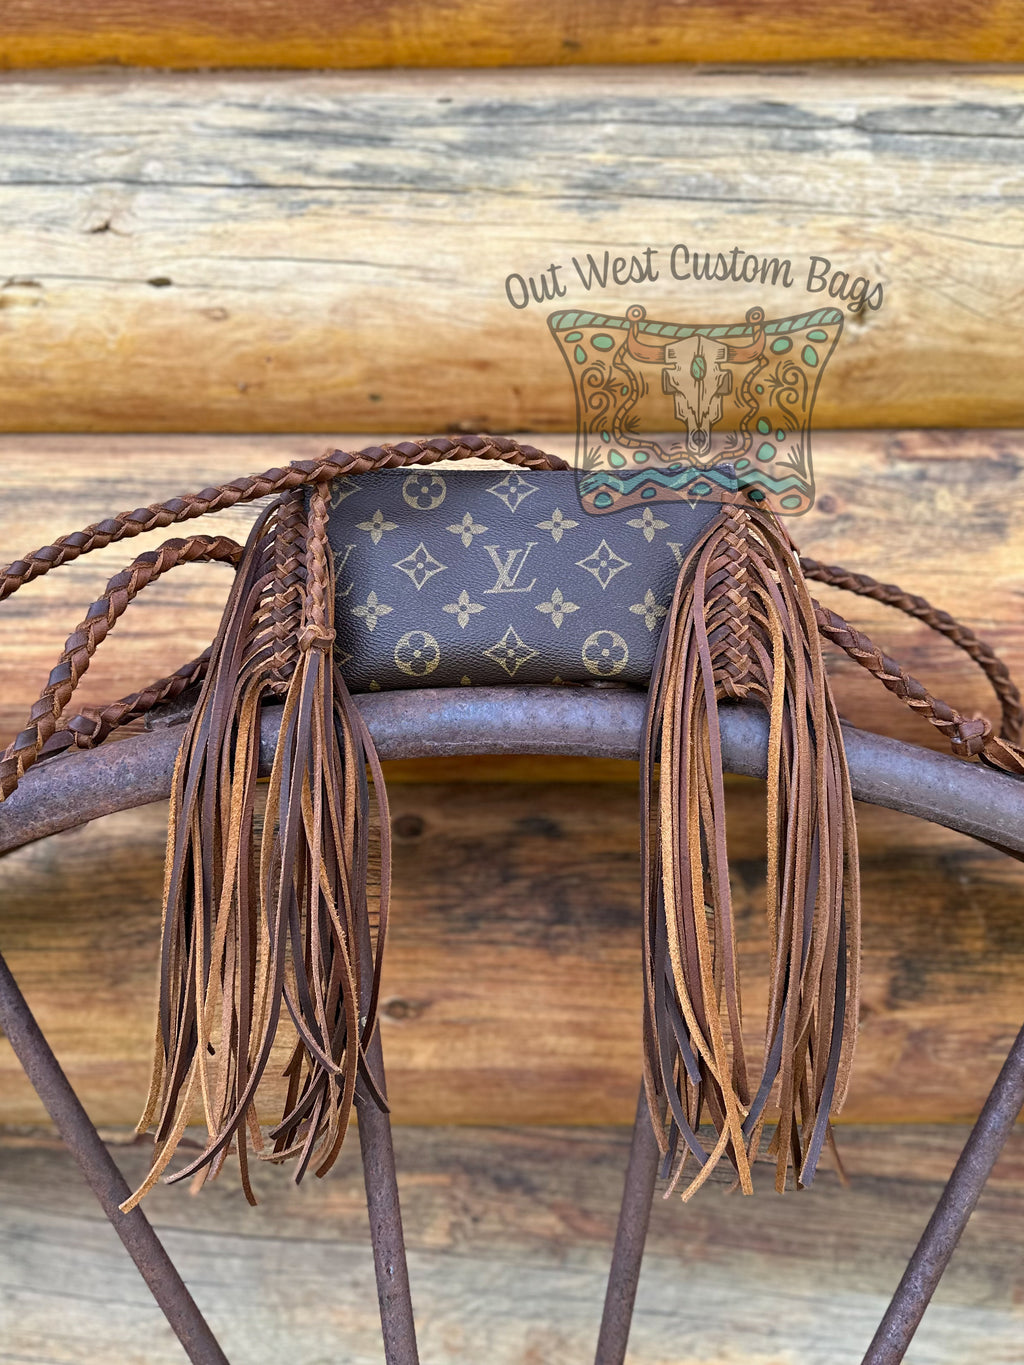 lv western purse with fringe